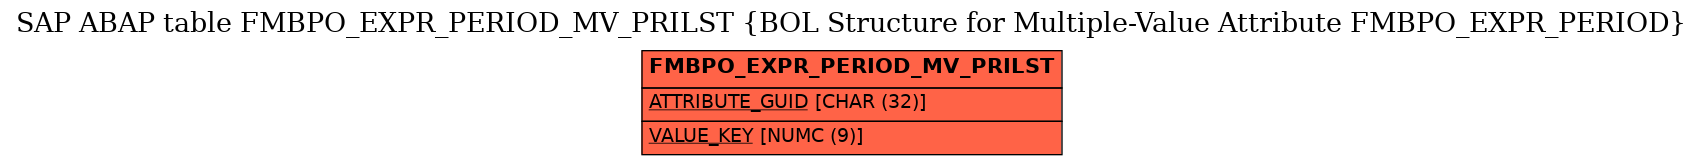 E-R Diagram for table FMBPO_EXPR_PERIOD_MV_PRILST (BOL Structure for Multiple-Value Attribute FMBPO_EXPR_PERIOD)